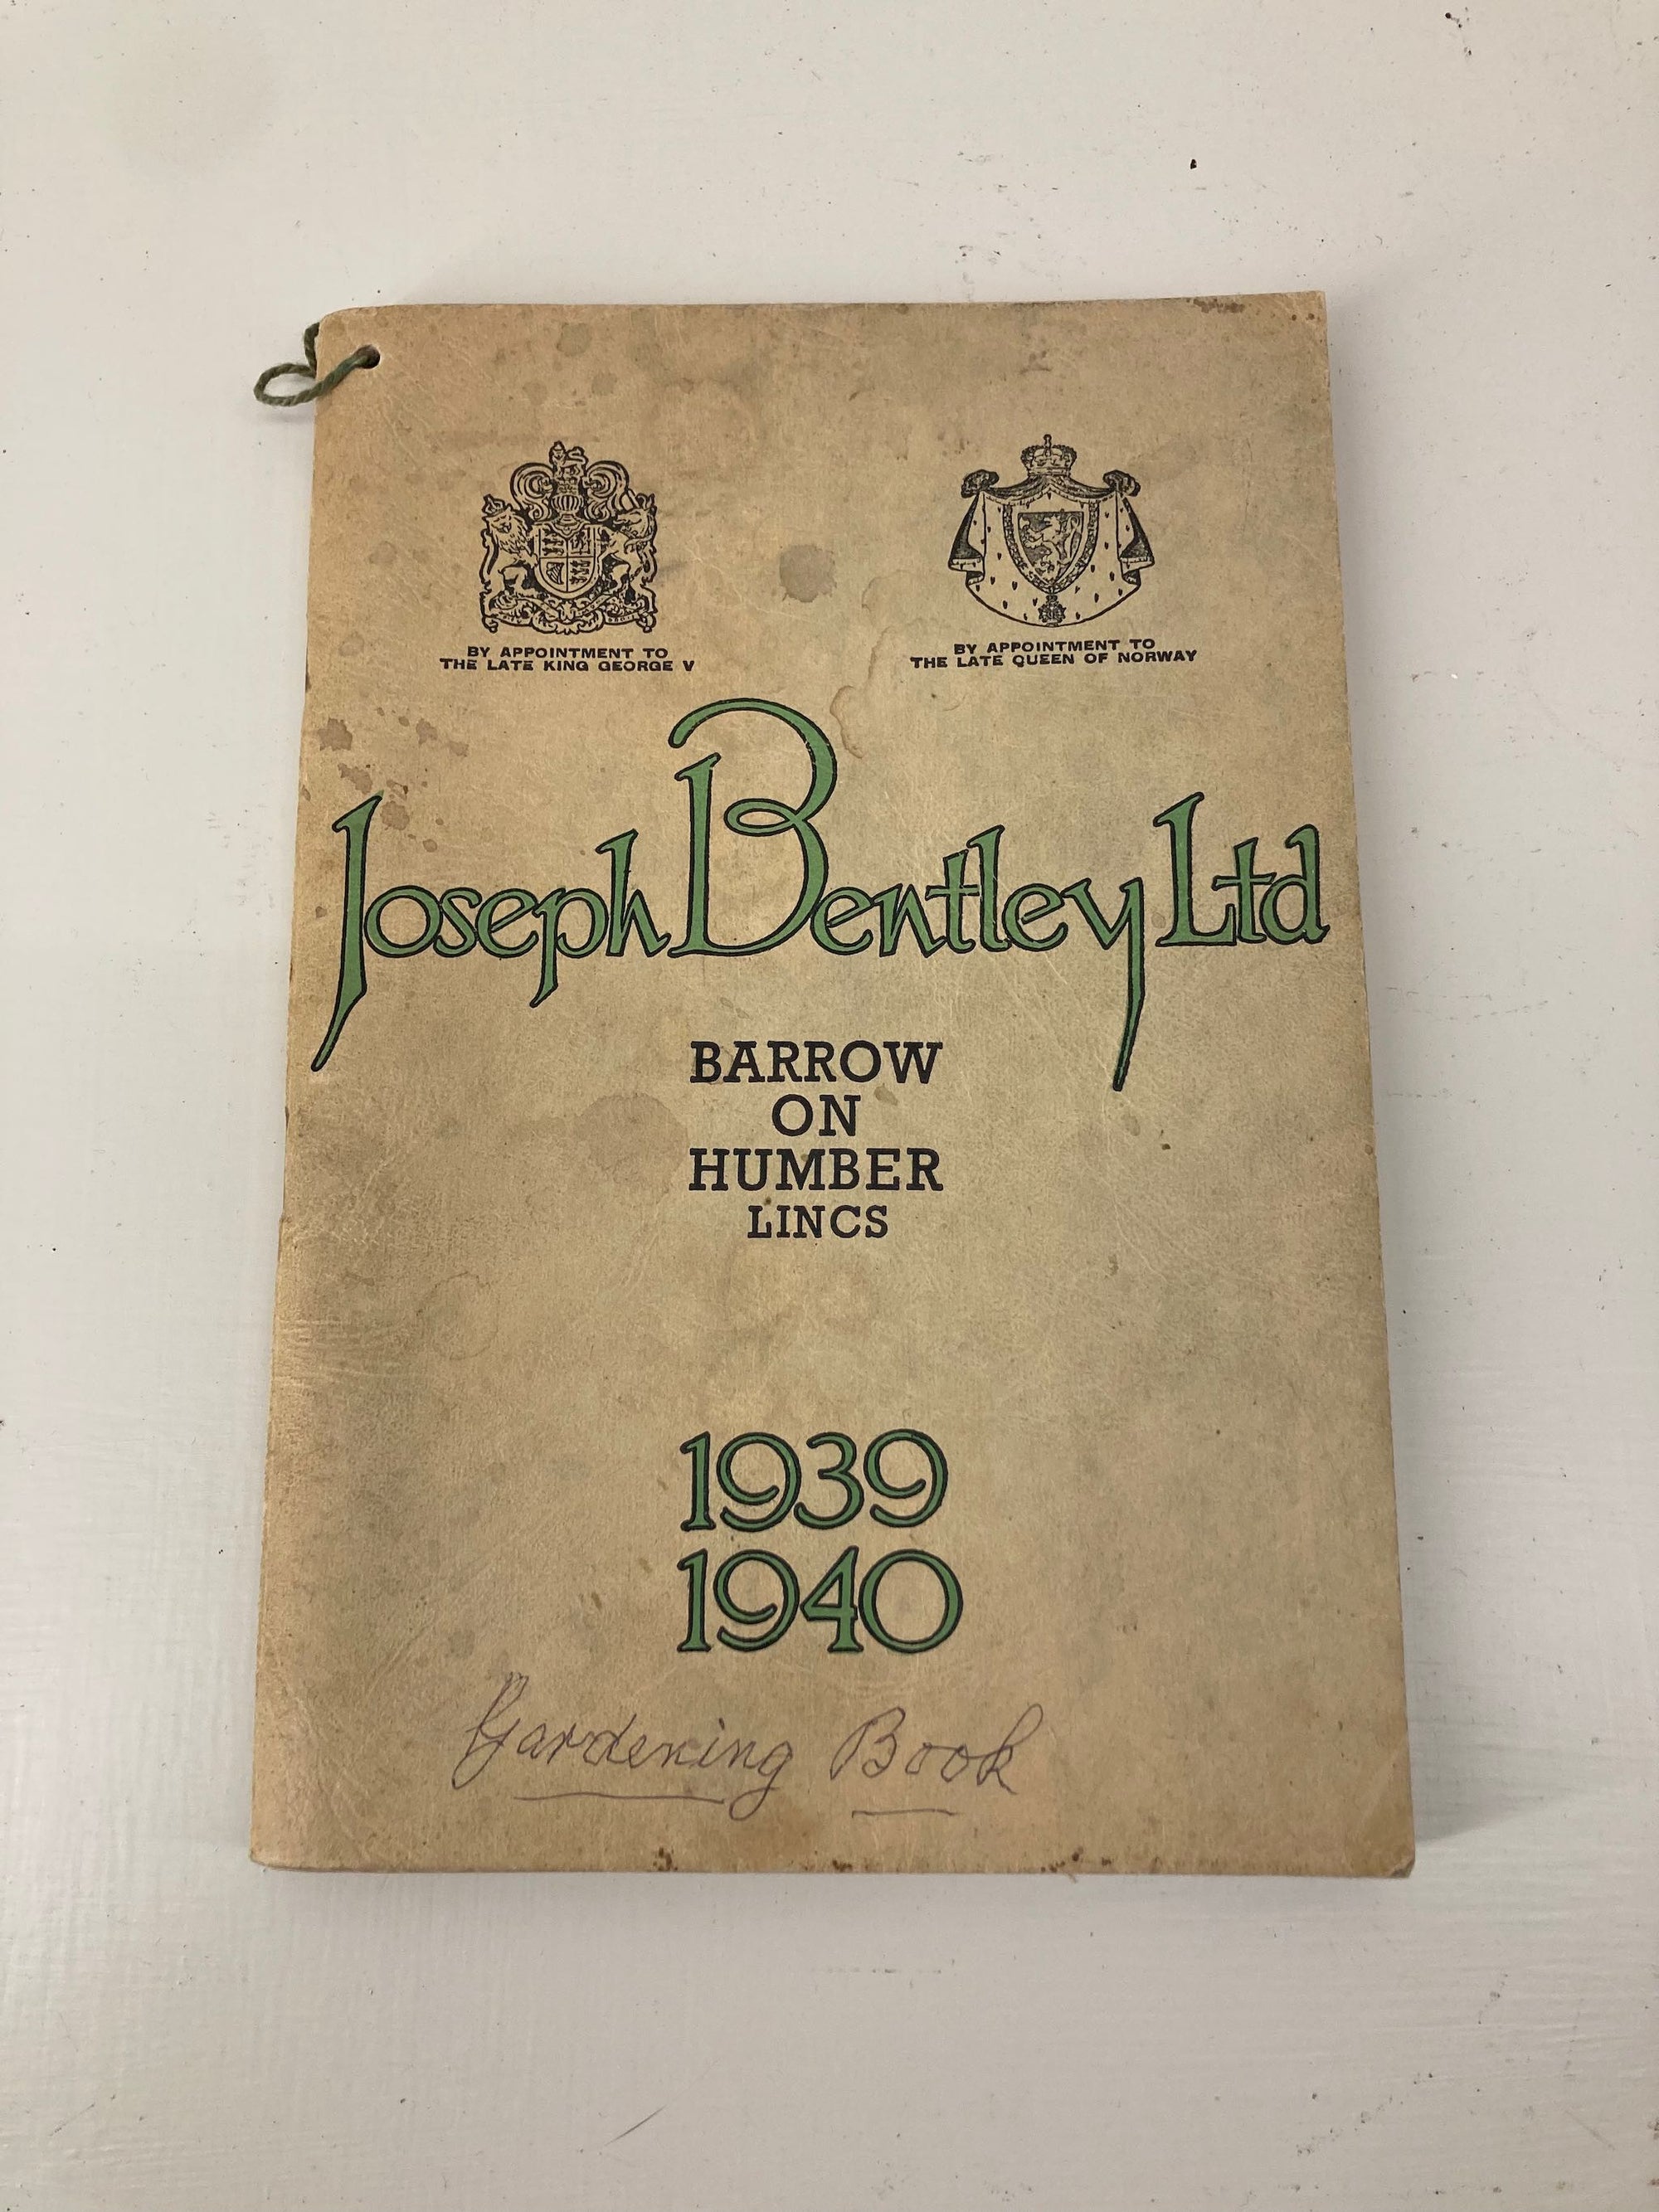 Joseph Bentley Sundries Catalogue, 1939 - 1940